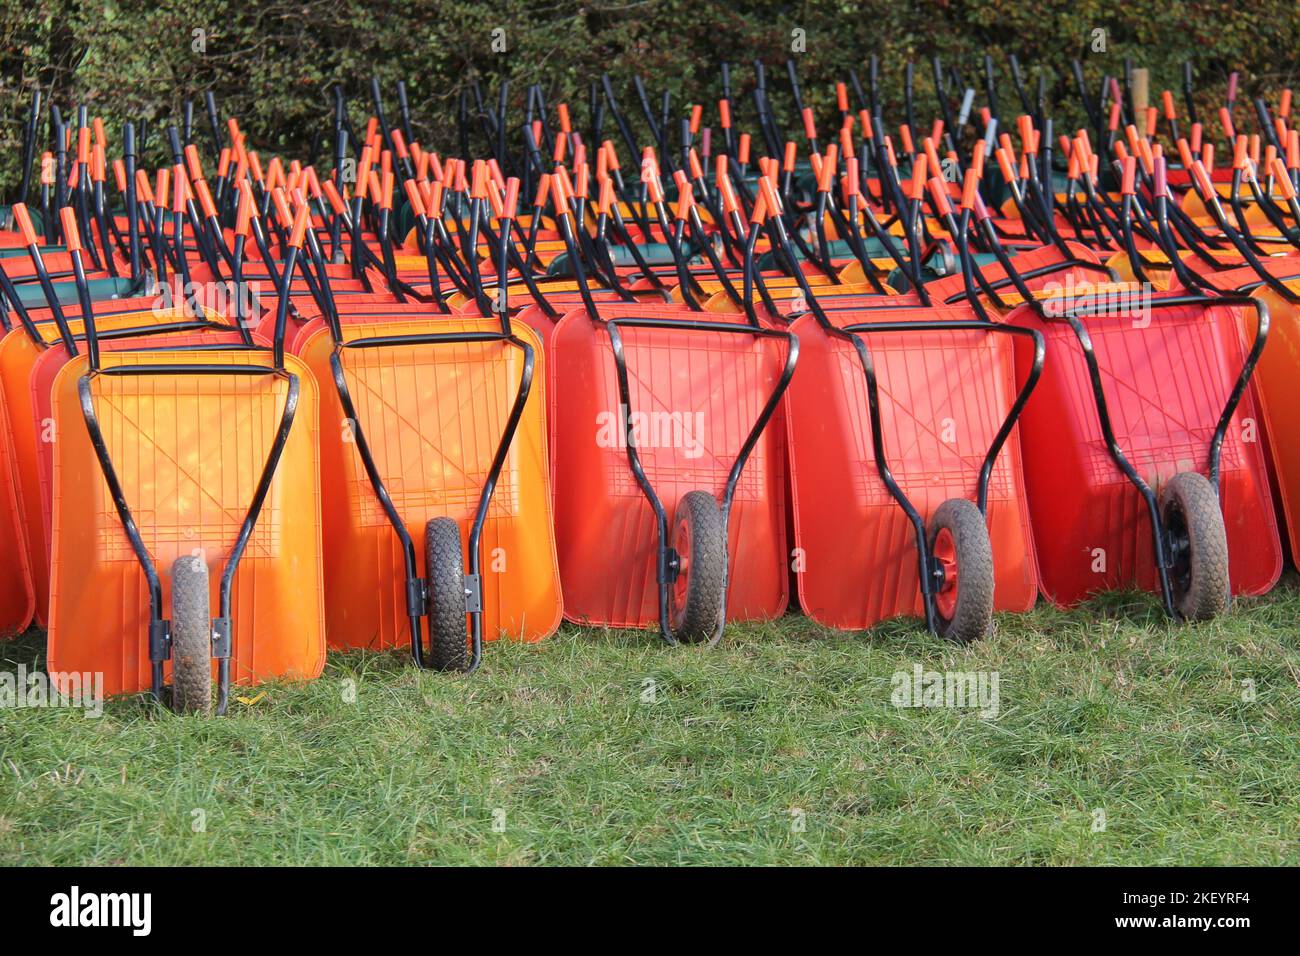 A Large Collection of Orange Plastic Garden Wheelbarrows. Stock Photo